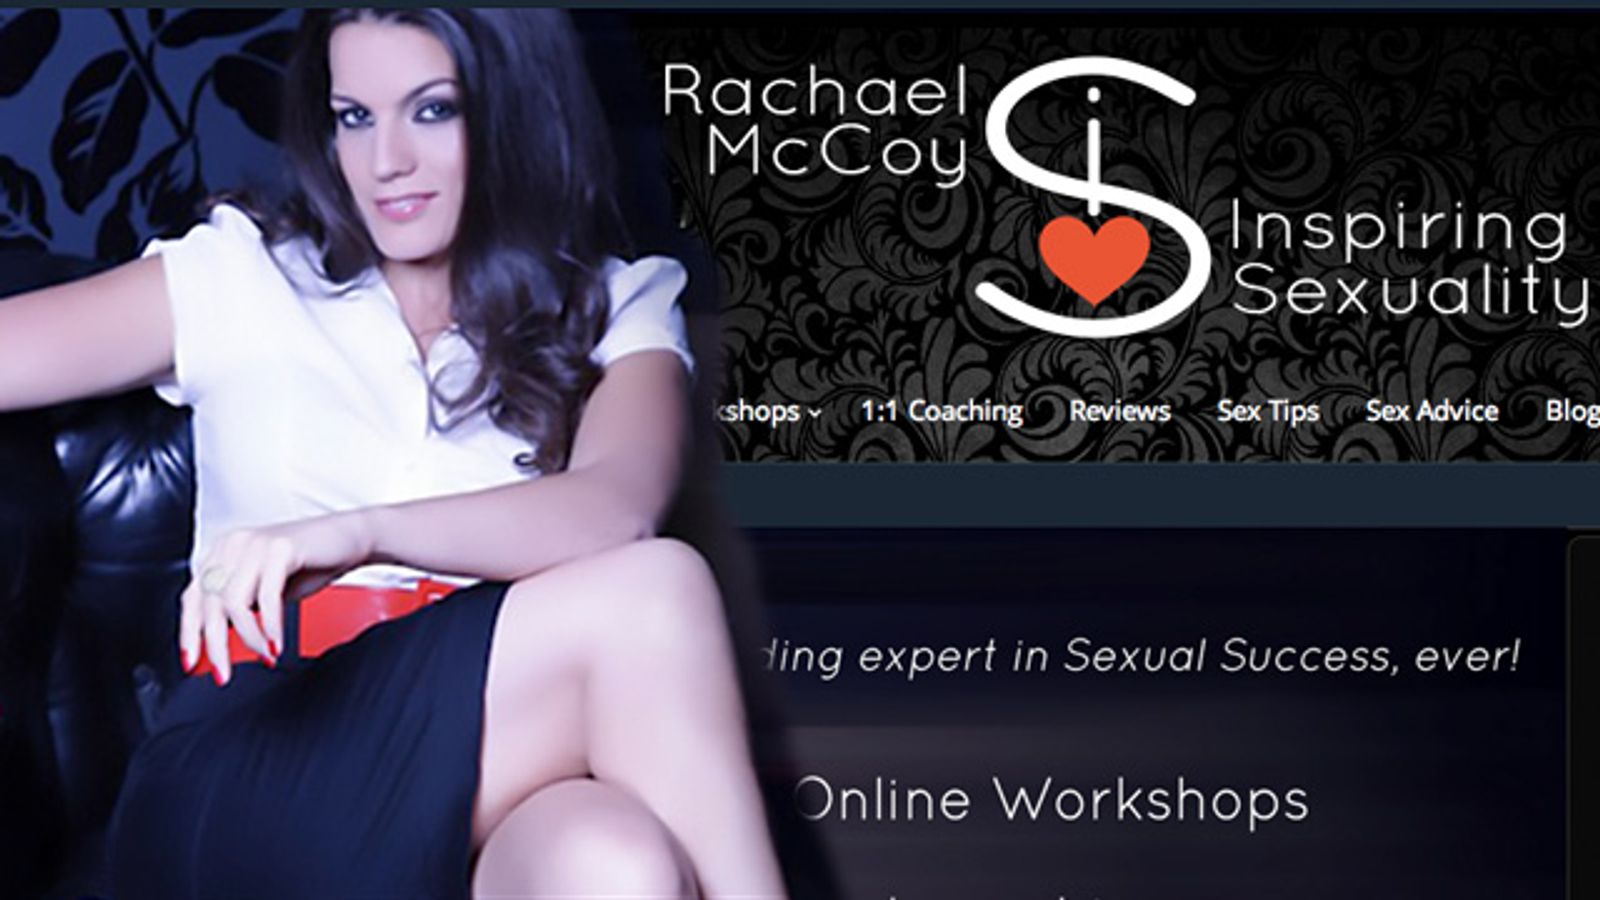 Sex, Relationship Coach Rachael McCoy Launches New Website